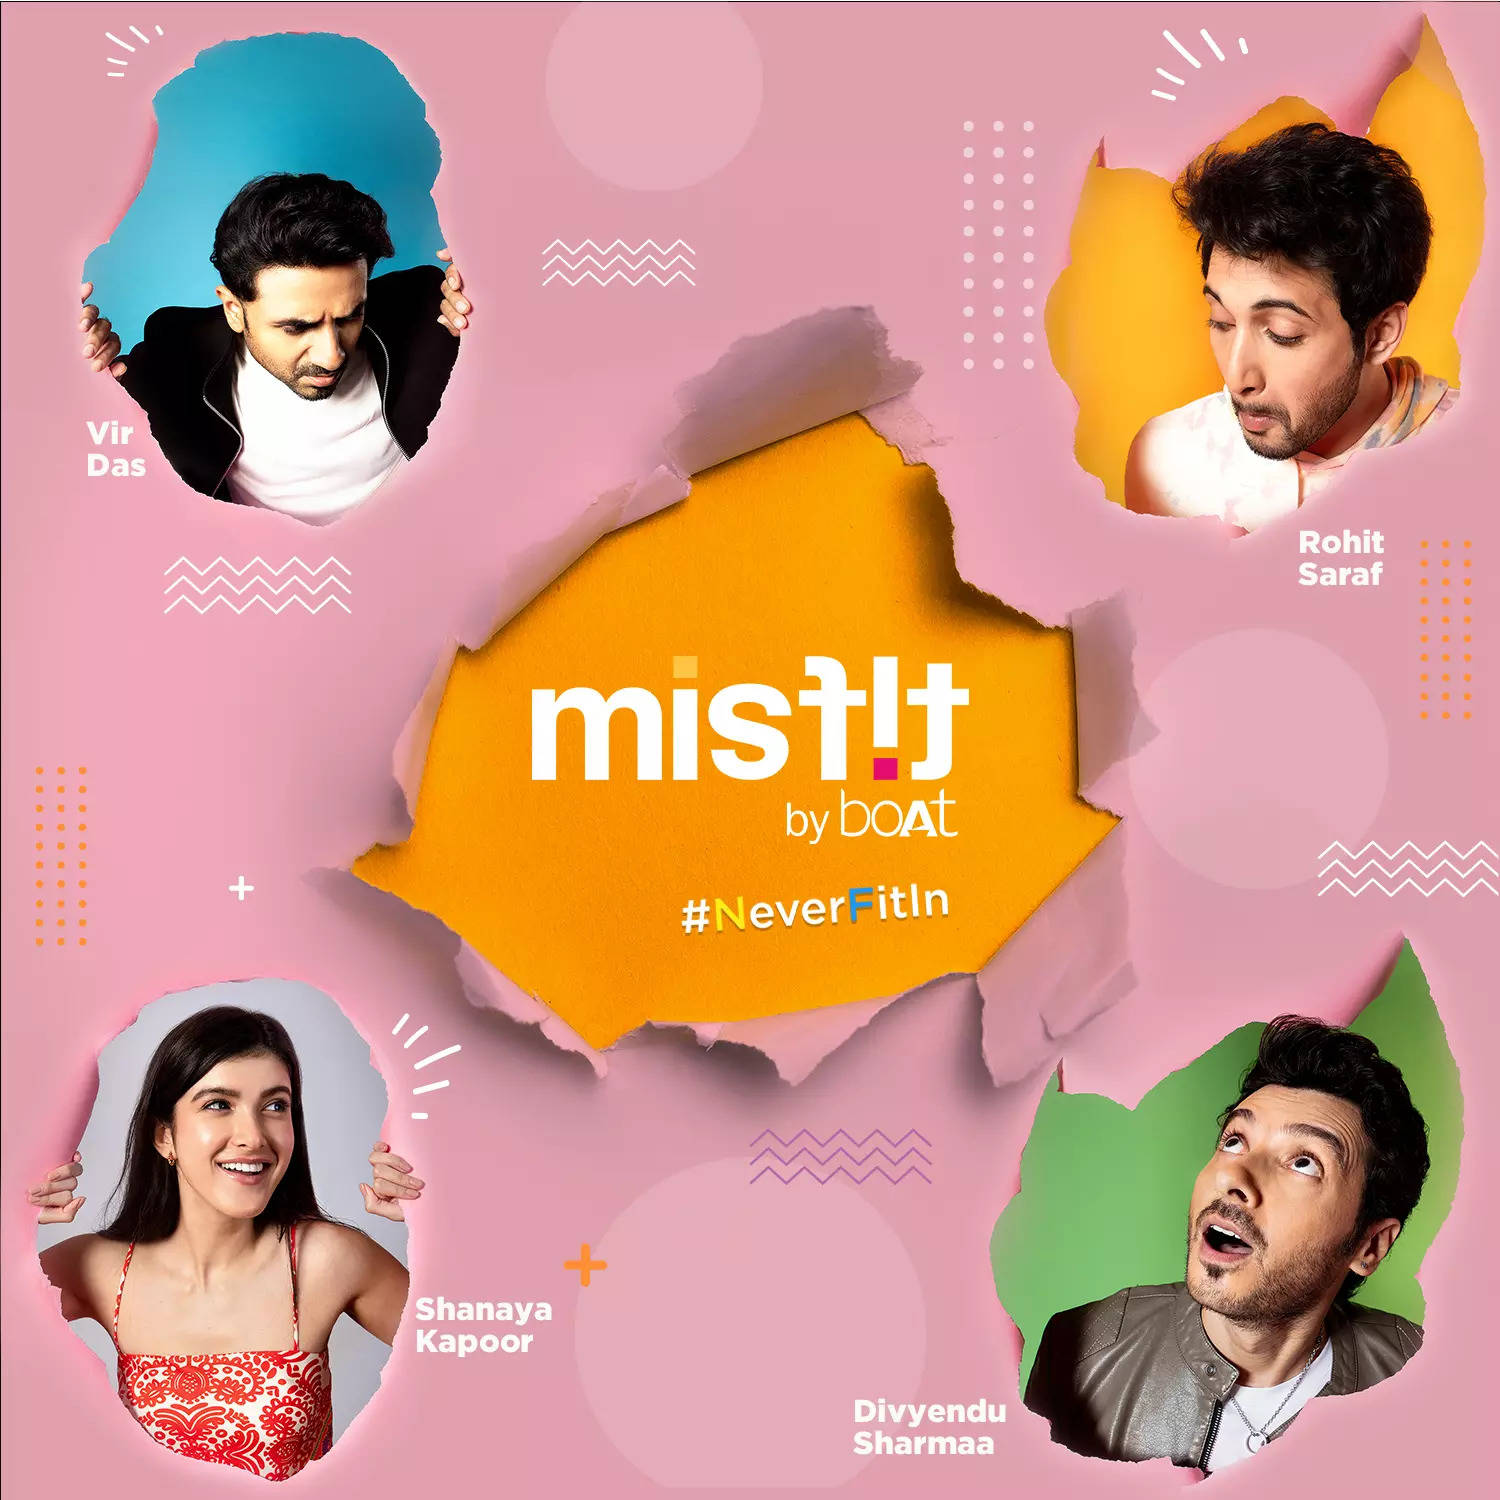 MISFIT by boAt onboards Shanaya Kapoor, Vir Das, Divyendu Sharmaa, and  Rohit Saraf as brand ambassadors, ET BrandEquity